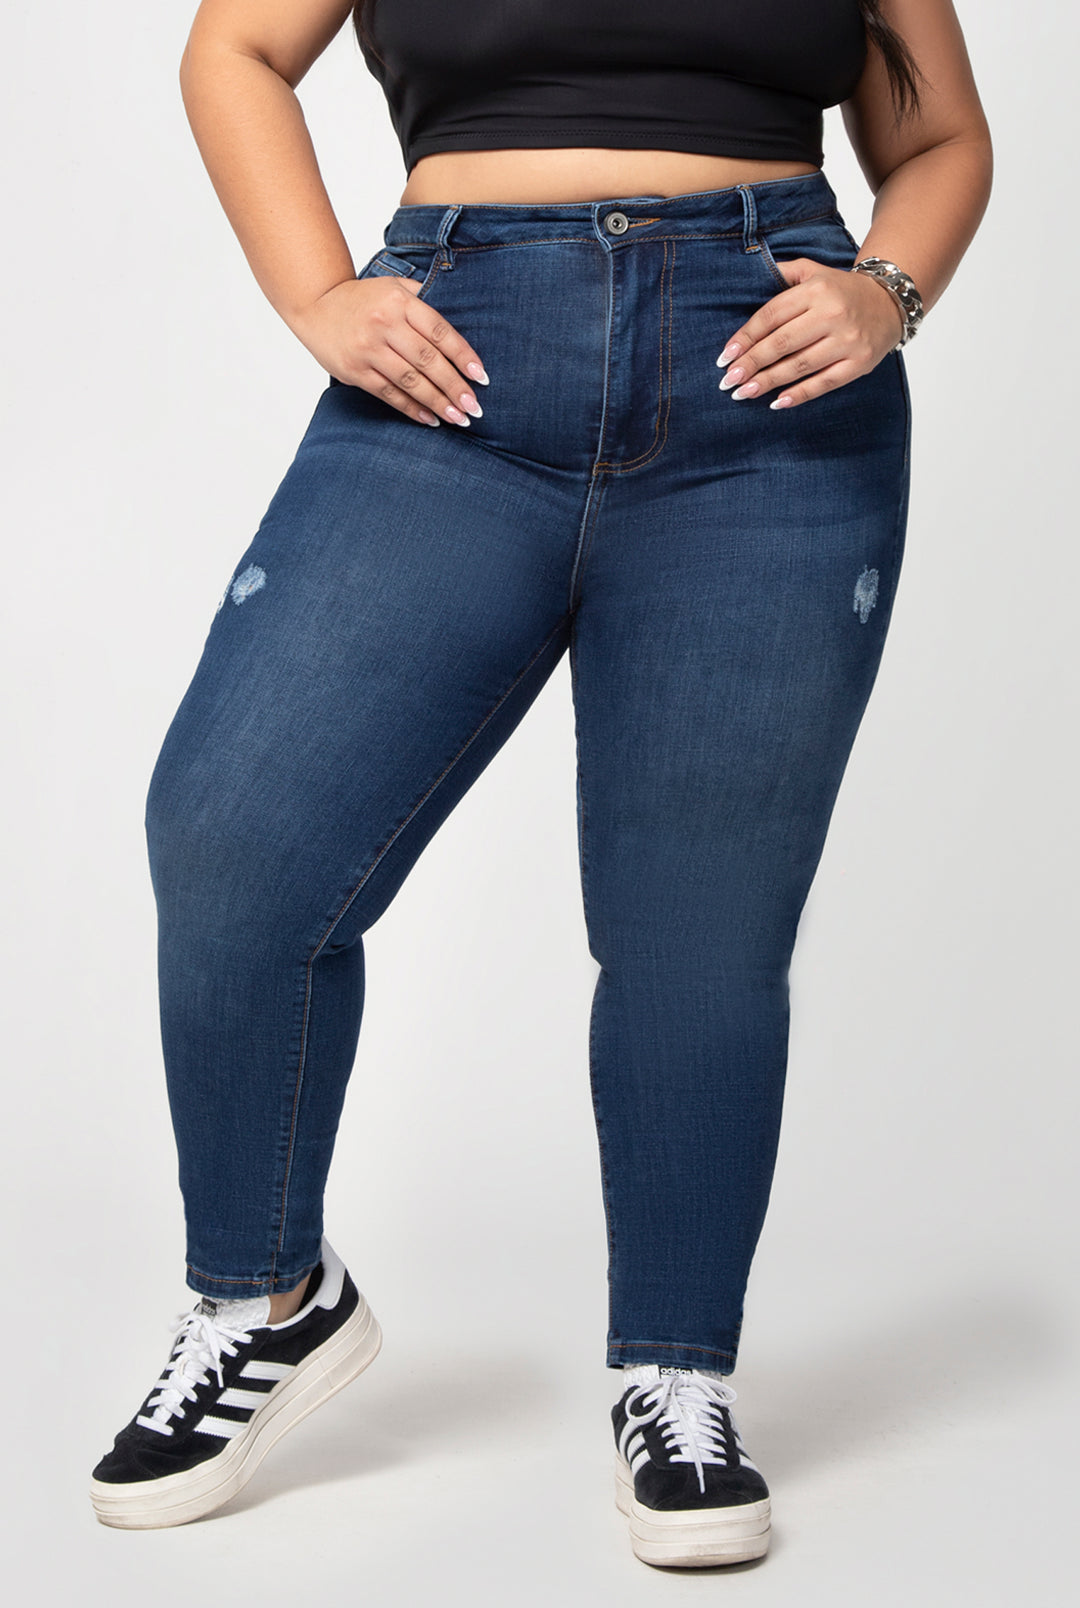 "jeans talla plus" "jeans para mujer tiro alto" "jeans plus size colombia" "jeans levanta cola control abdomen"